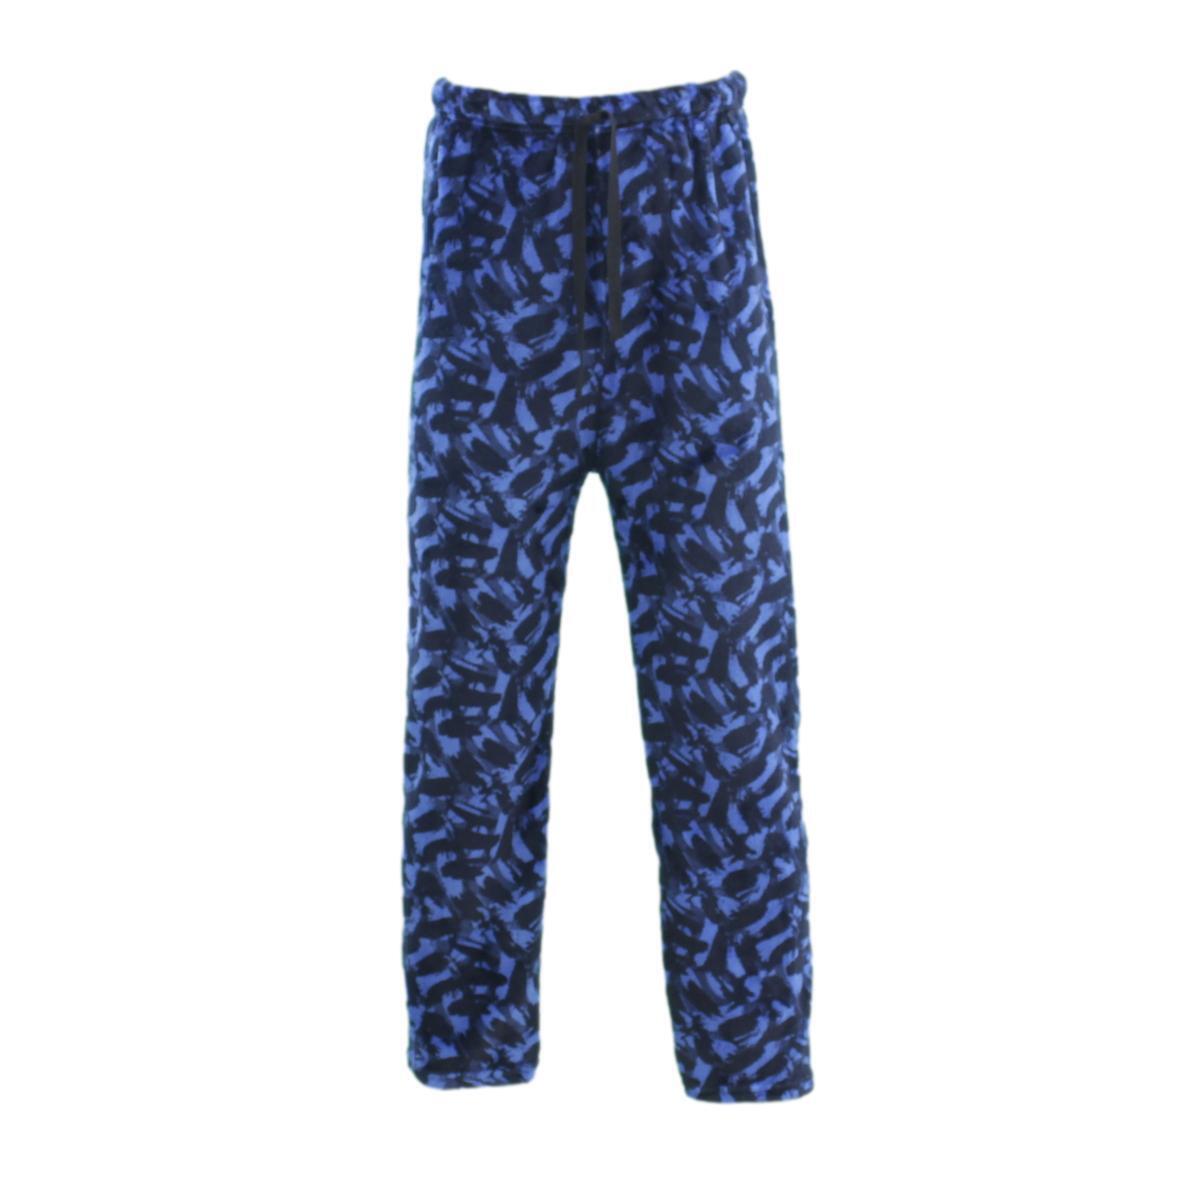 Men's Loungewear Skiing Penguin Print Warm Winter Fleece Pajama Pants